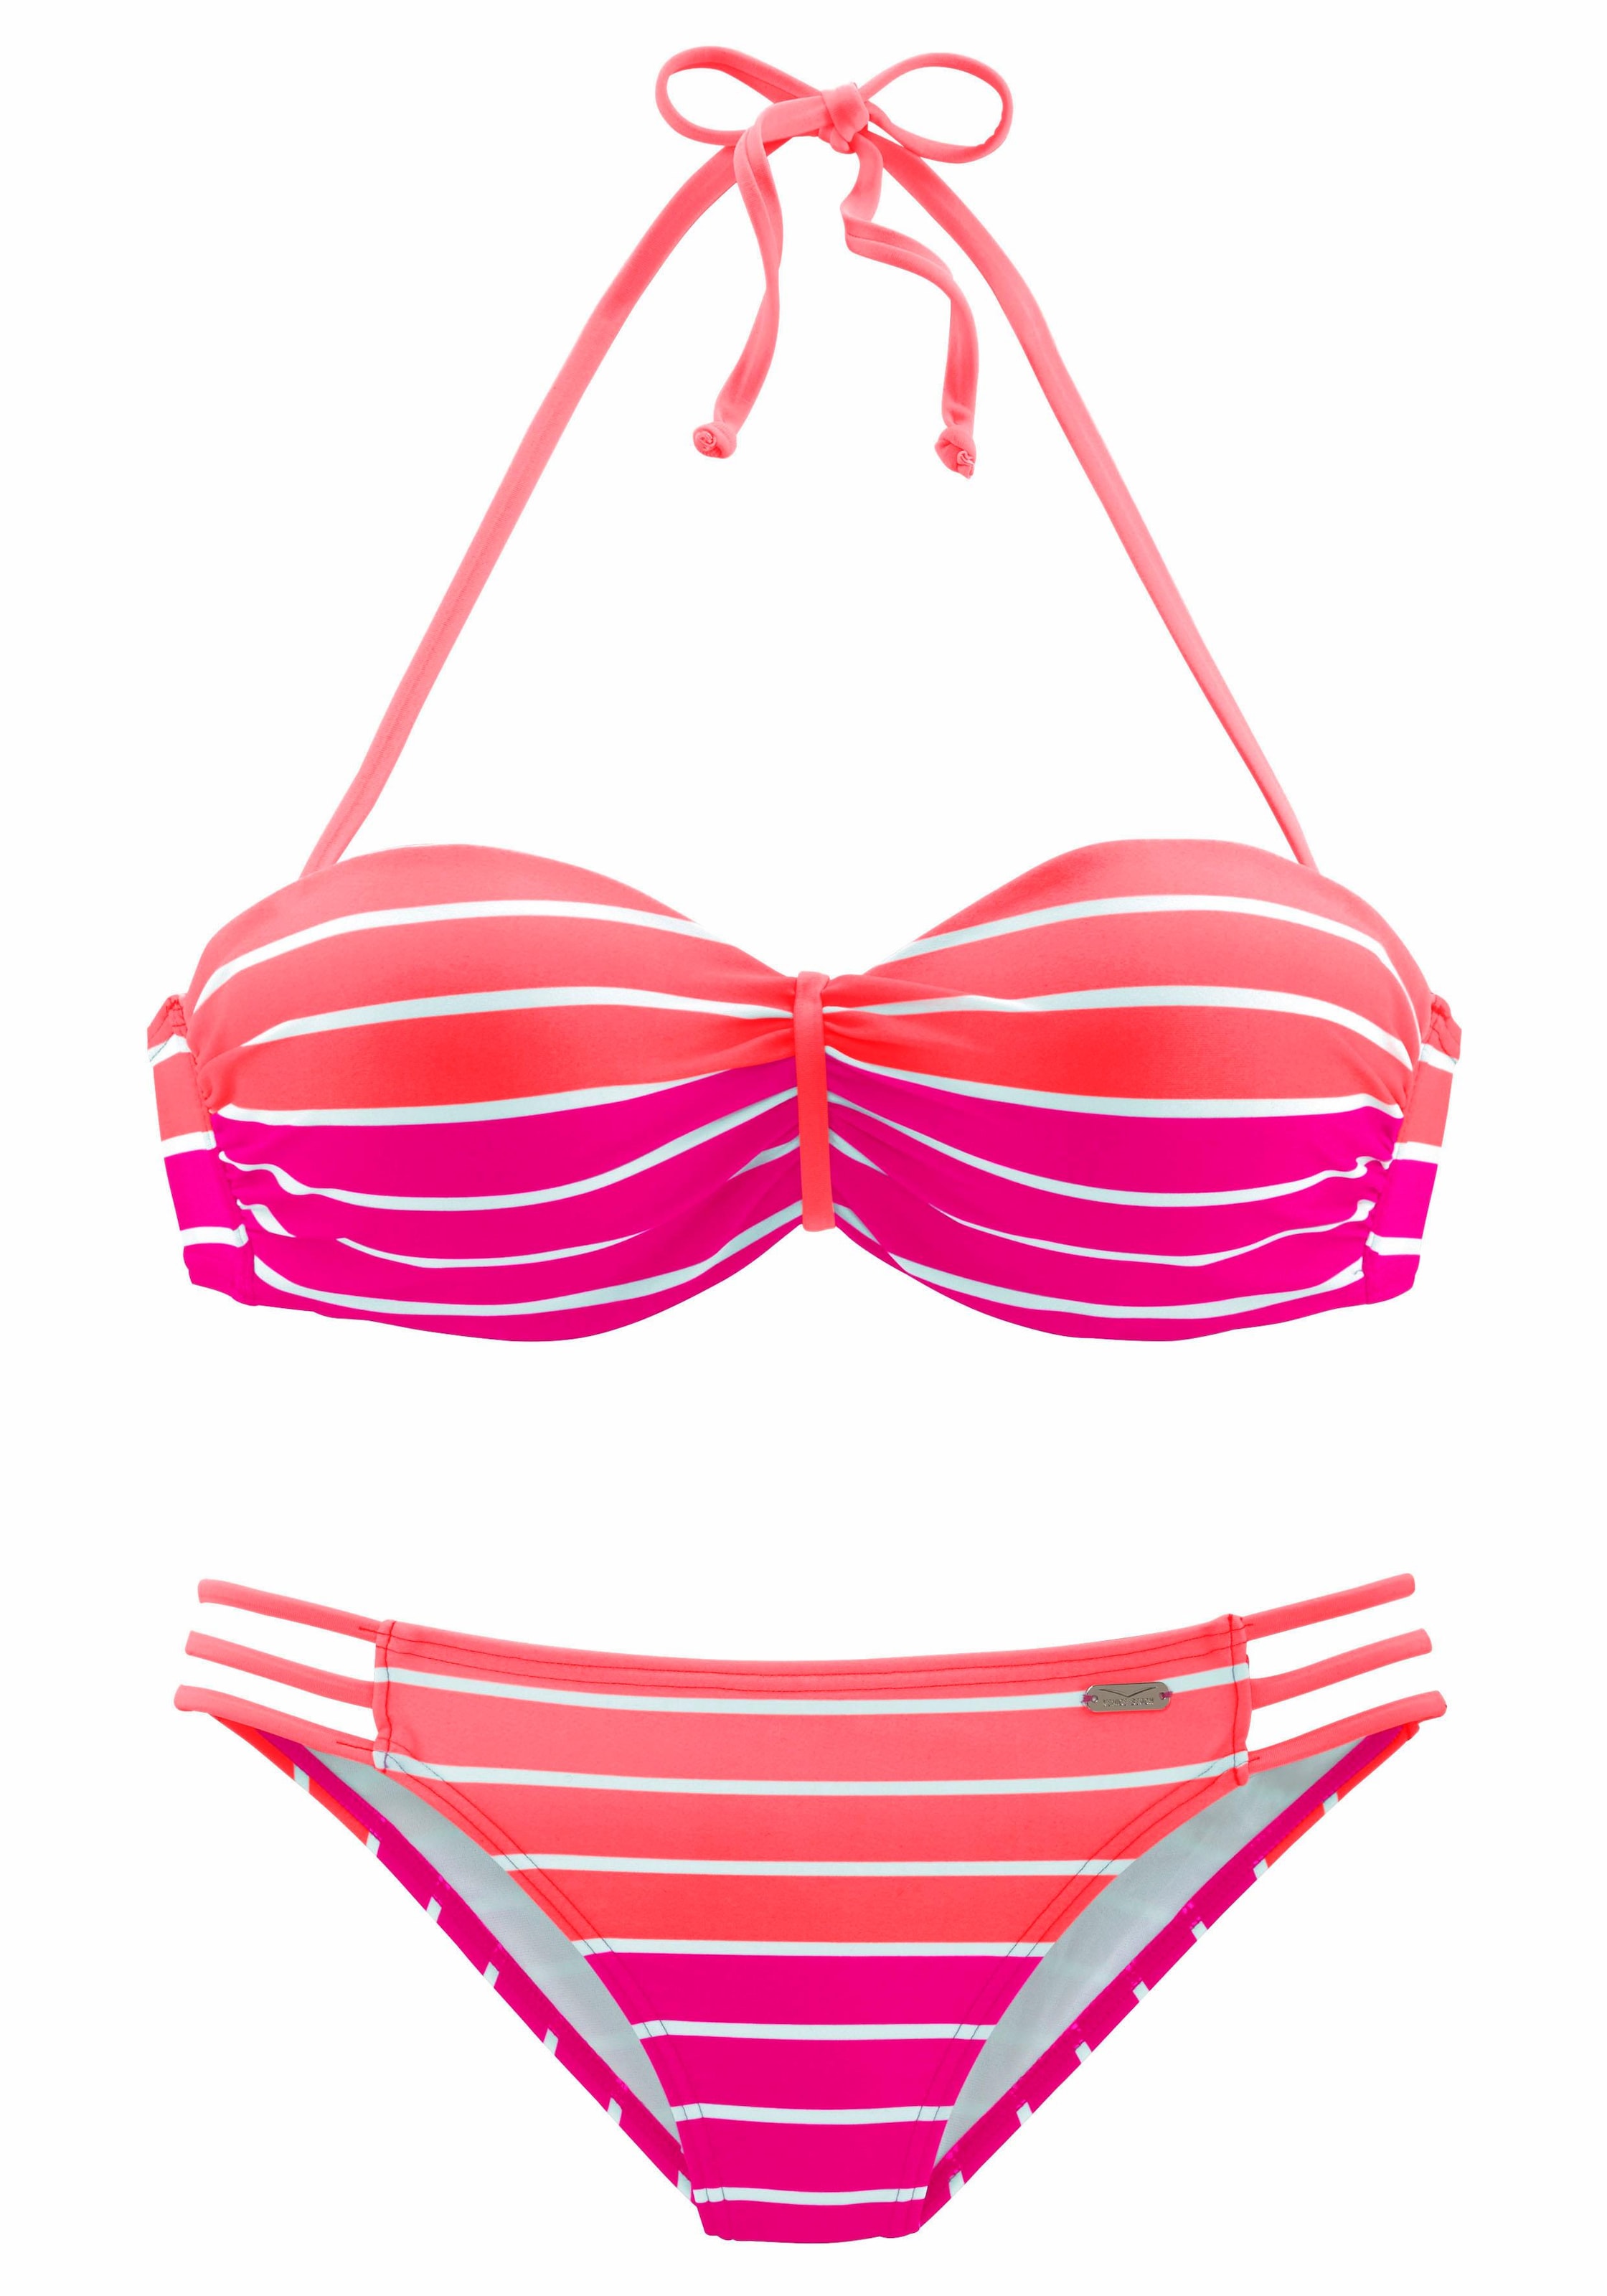 Venice Beach Bügel-Bandeau-Bikini, im Streifen-Look bei trendigen